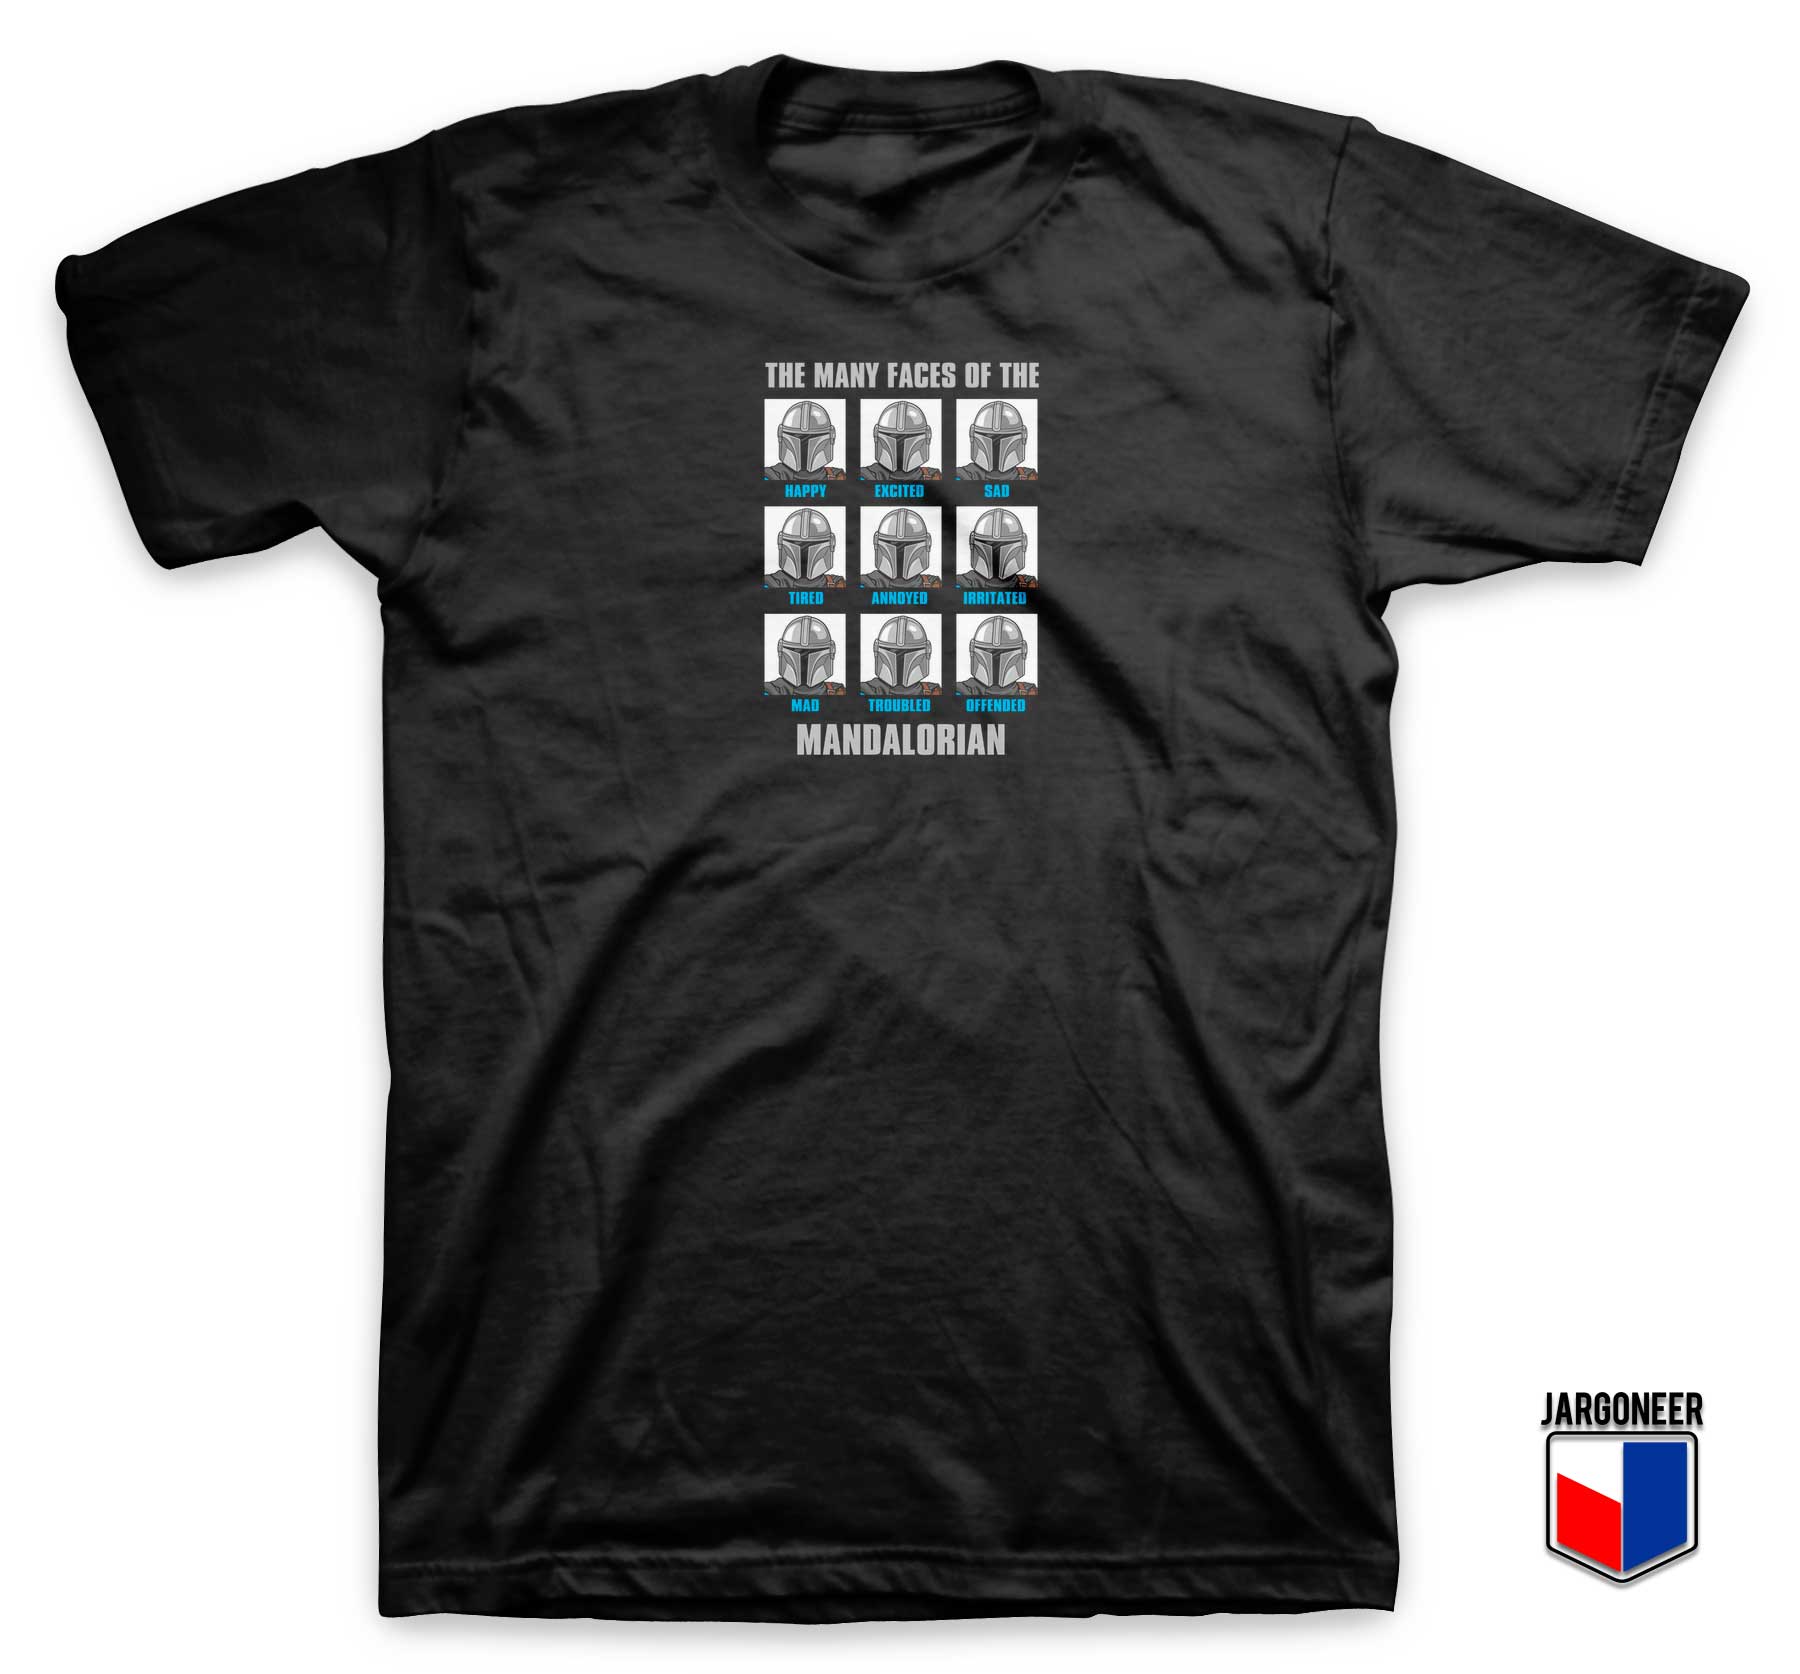 Mandolarian Expressions T Shirt - Shop Unique Graphic Cool Shirt Designs